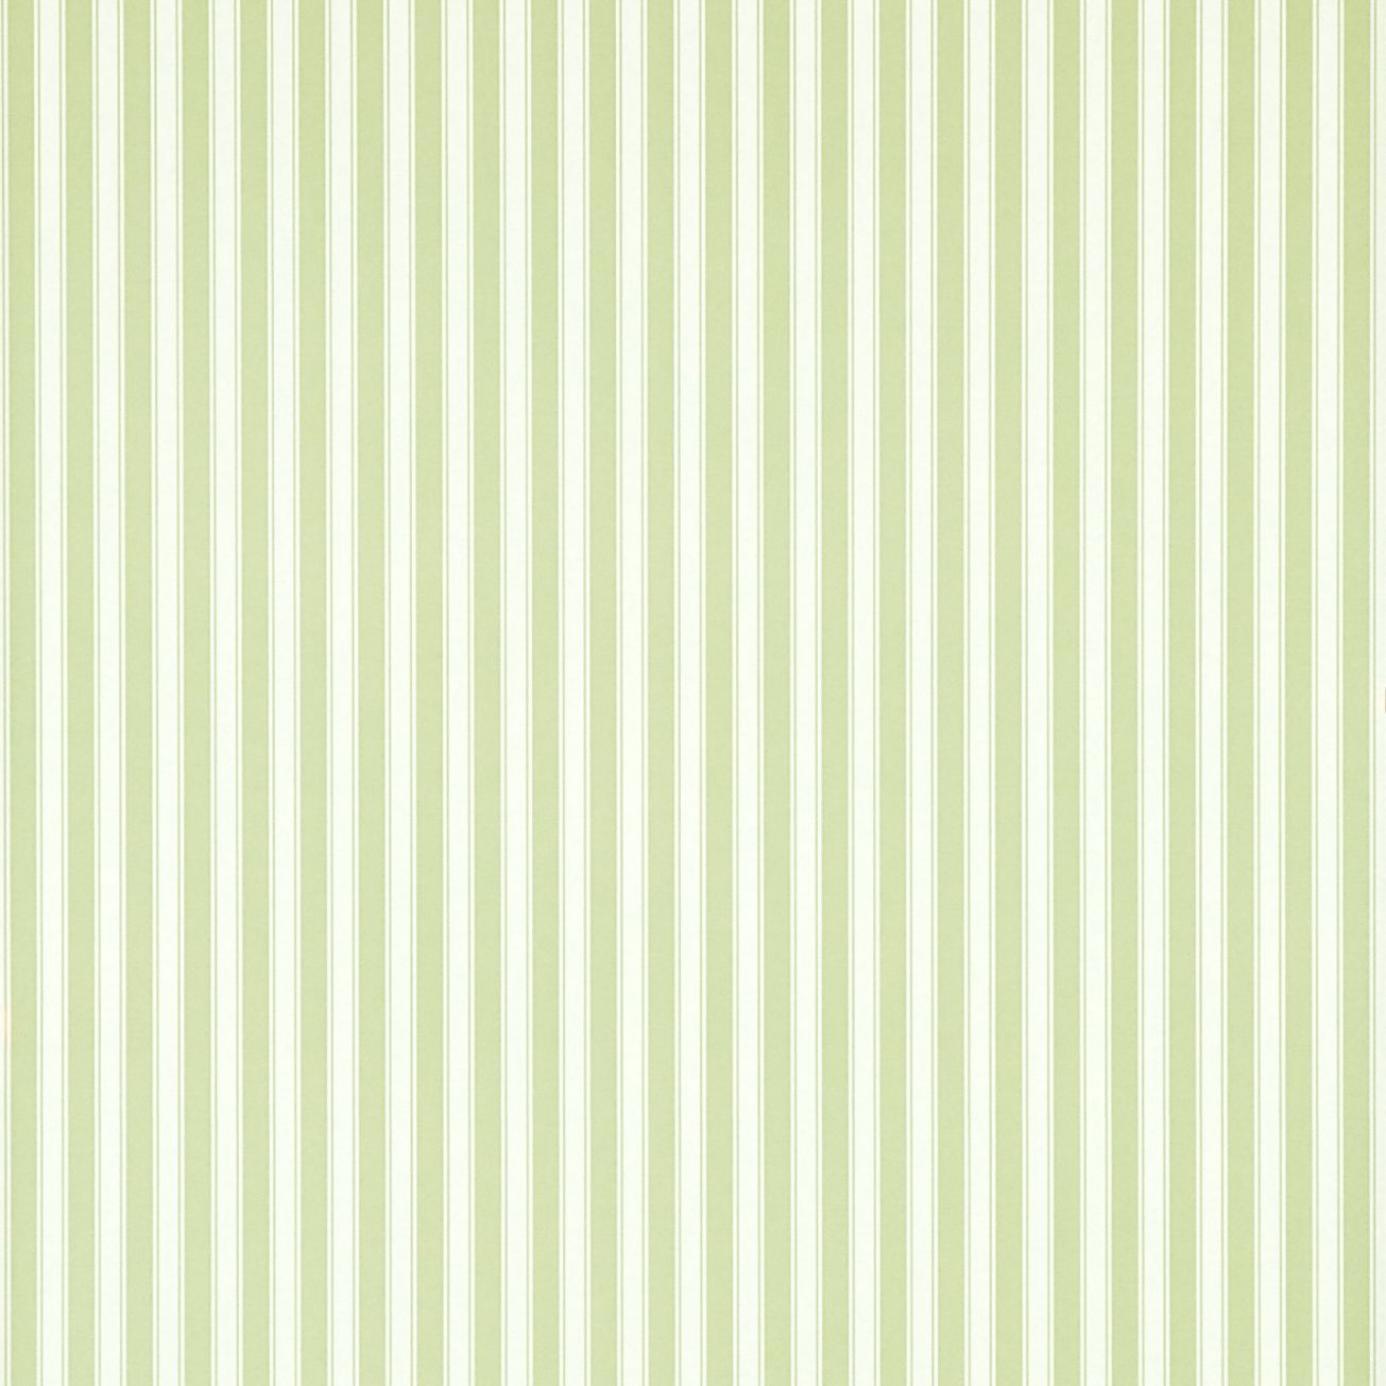 New Tiger Stripe Wallpaper Green Ivory DCAVTP103 211712